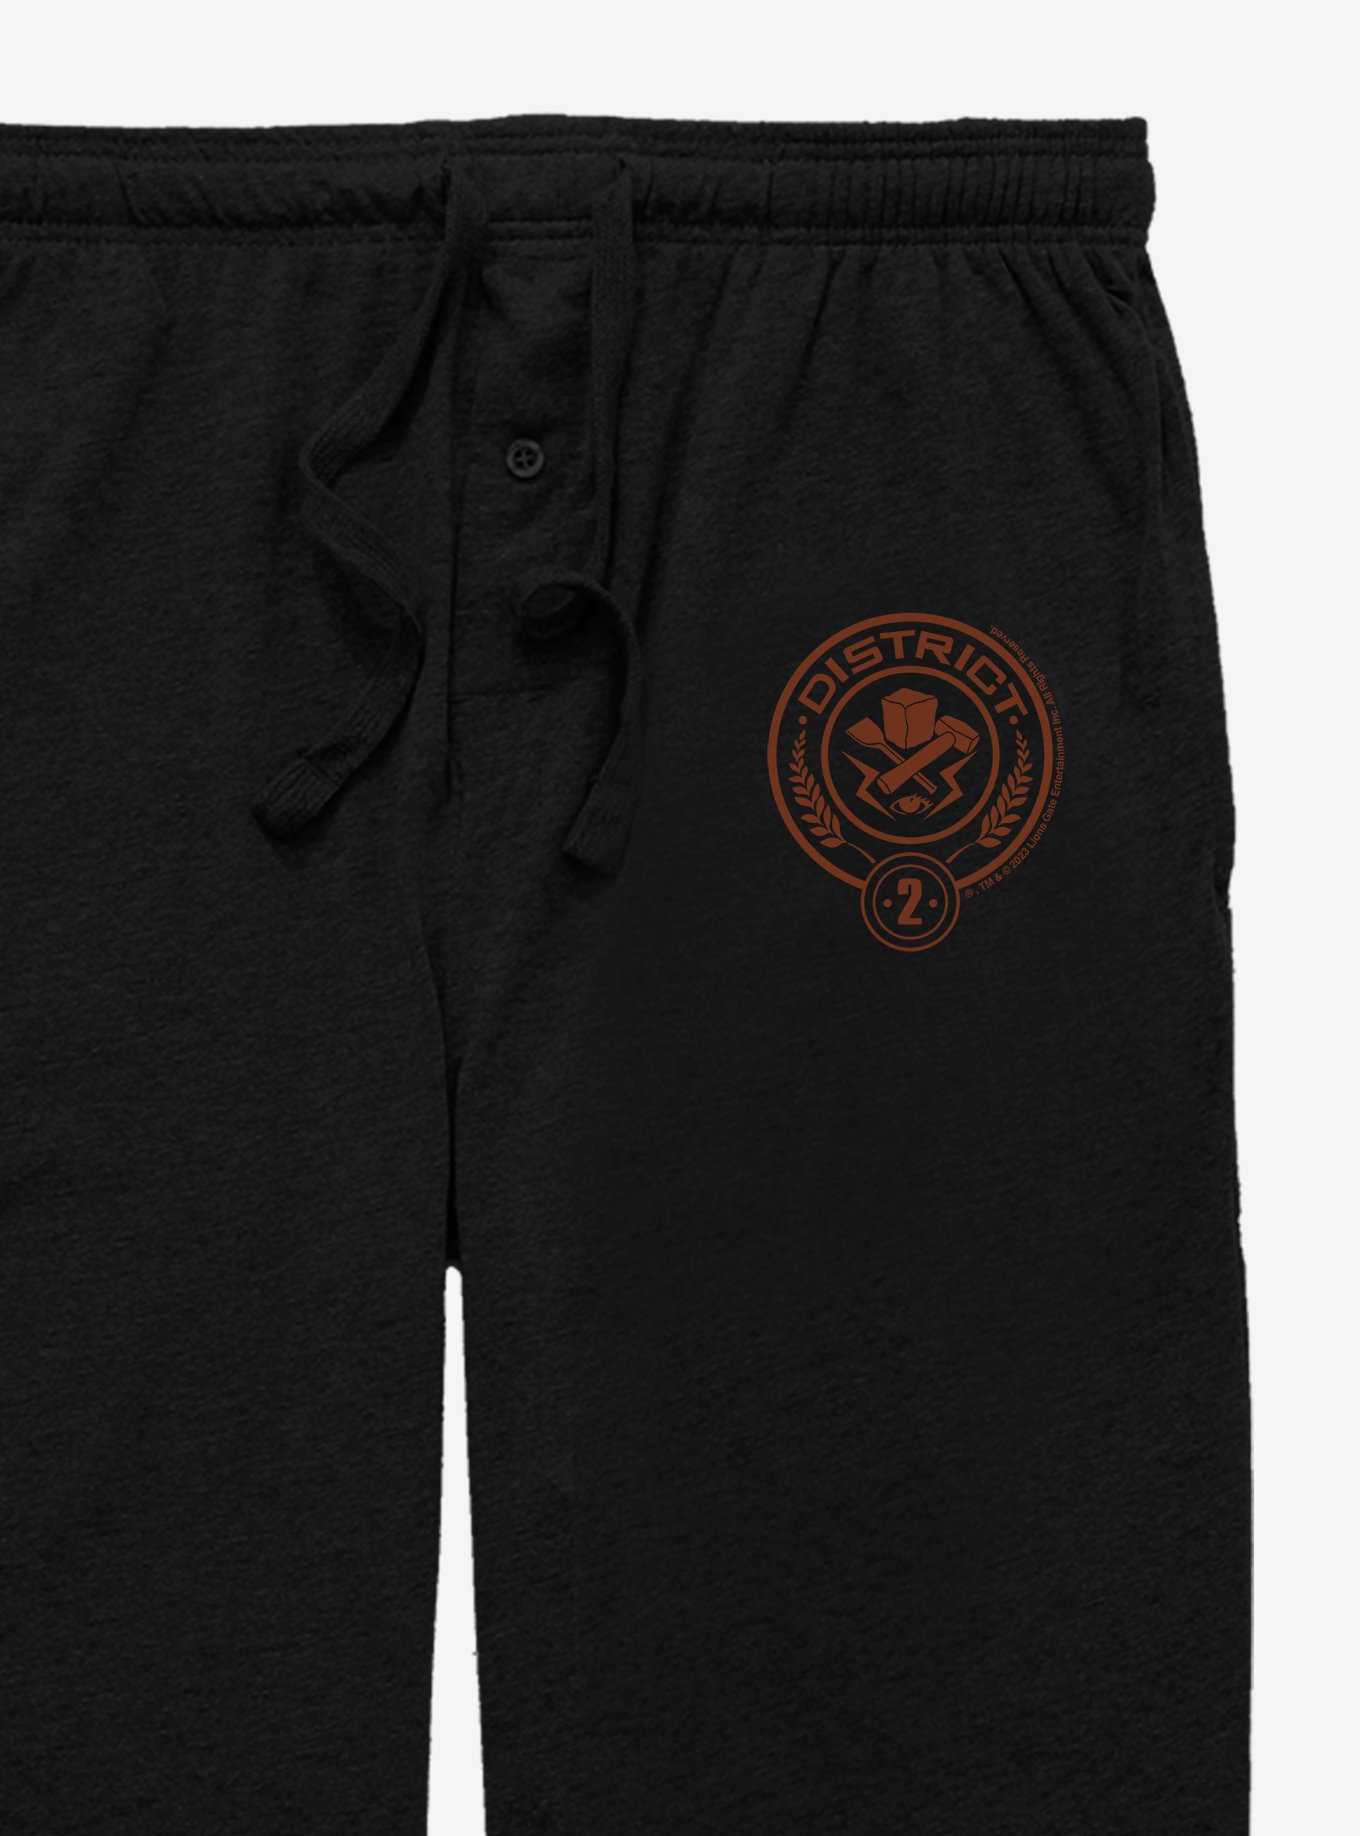 Hunger Games District 2 Emblem Pajama Pants, , hi-res